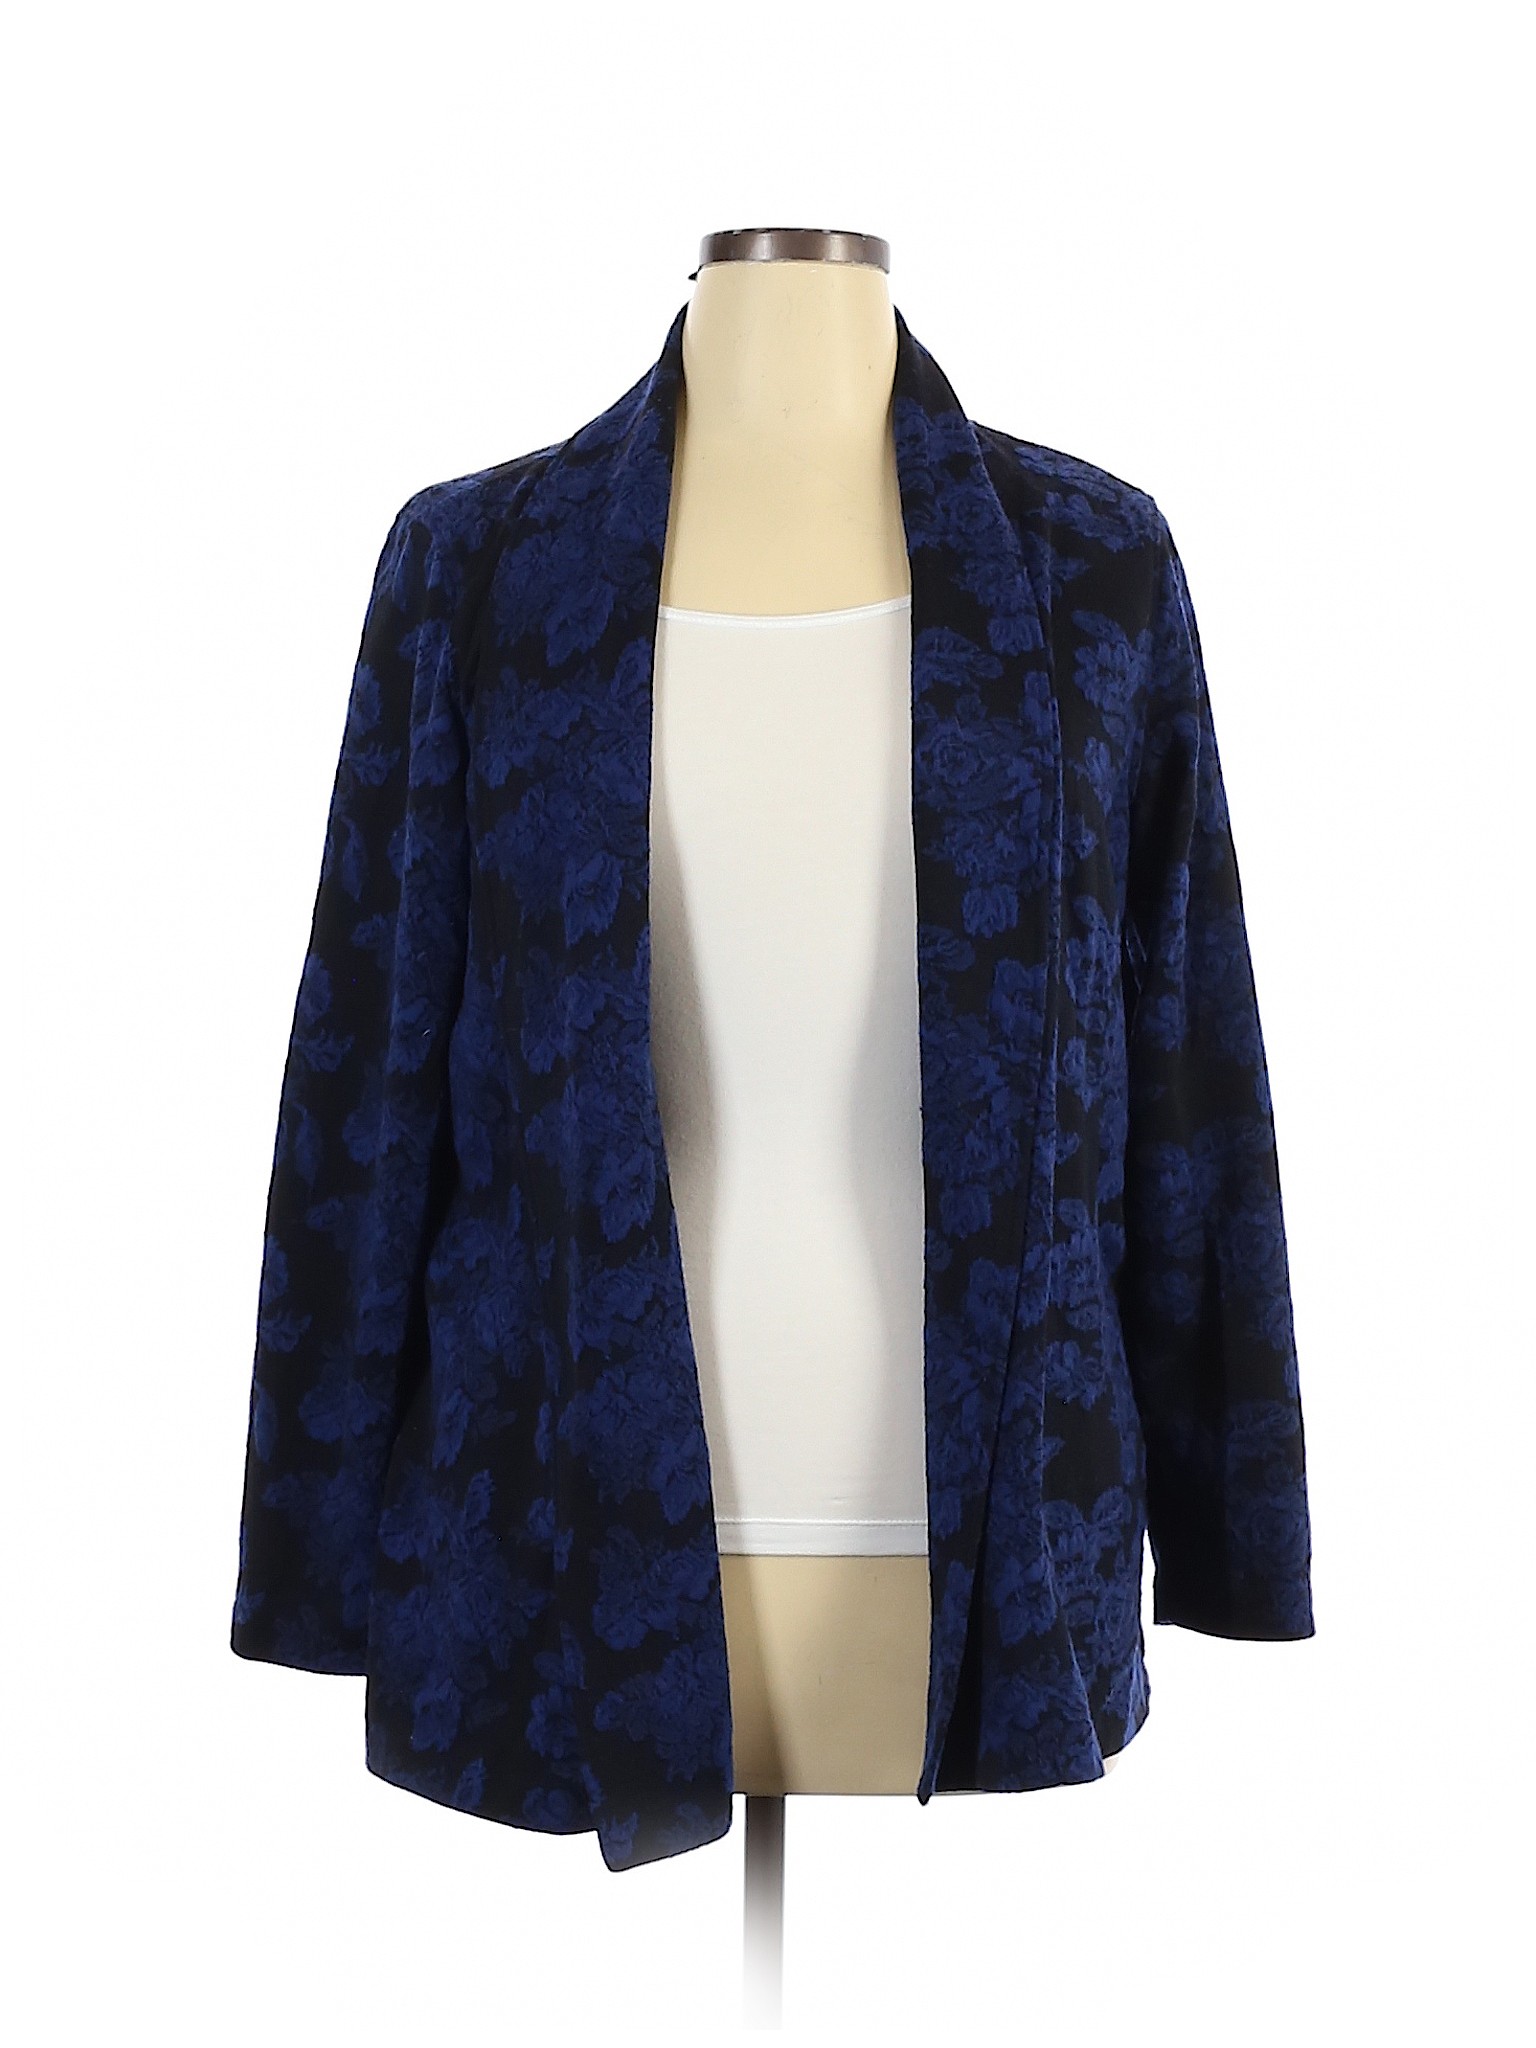 Christopher & Banks Women Blue Cardigan XL | eBay